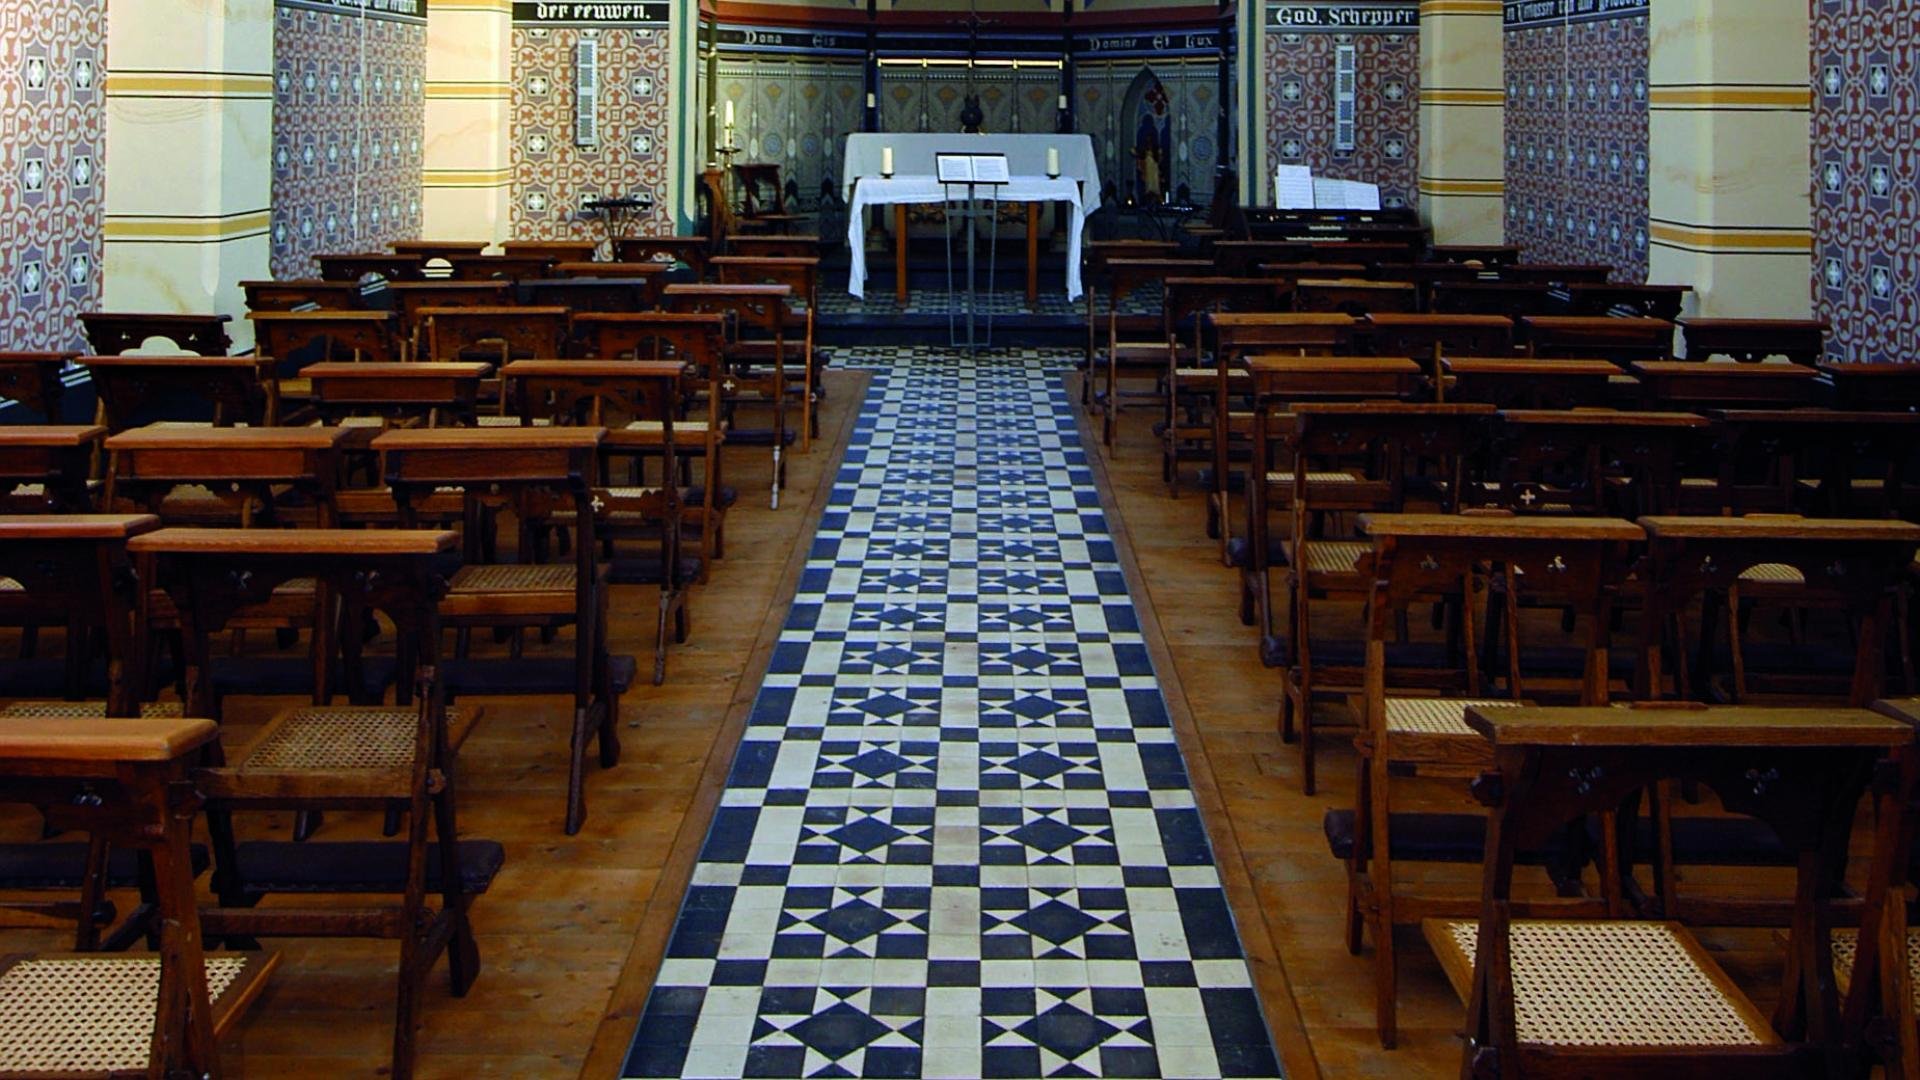 Kerk Zwolle interieur